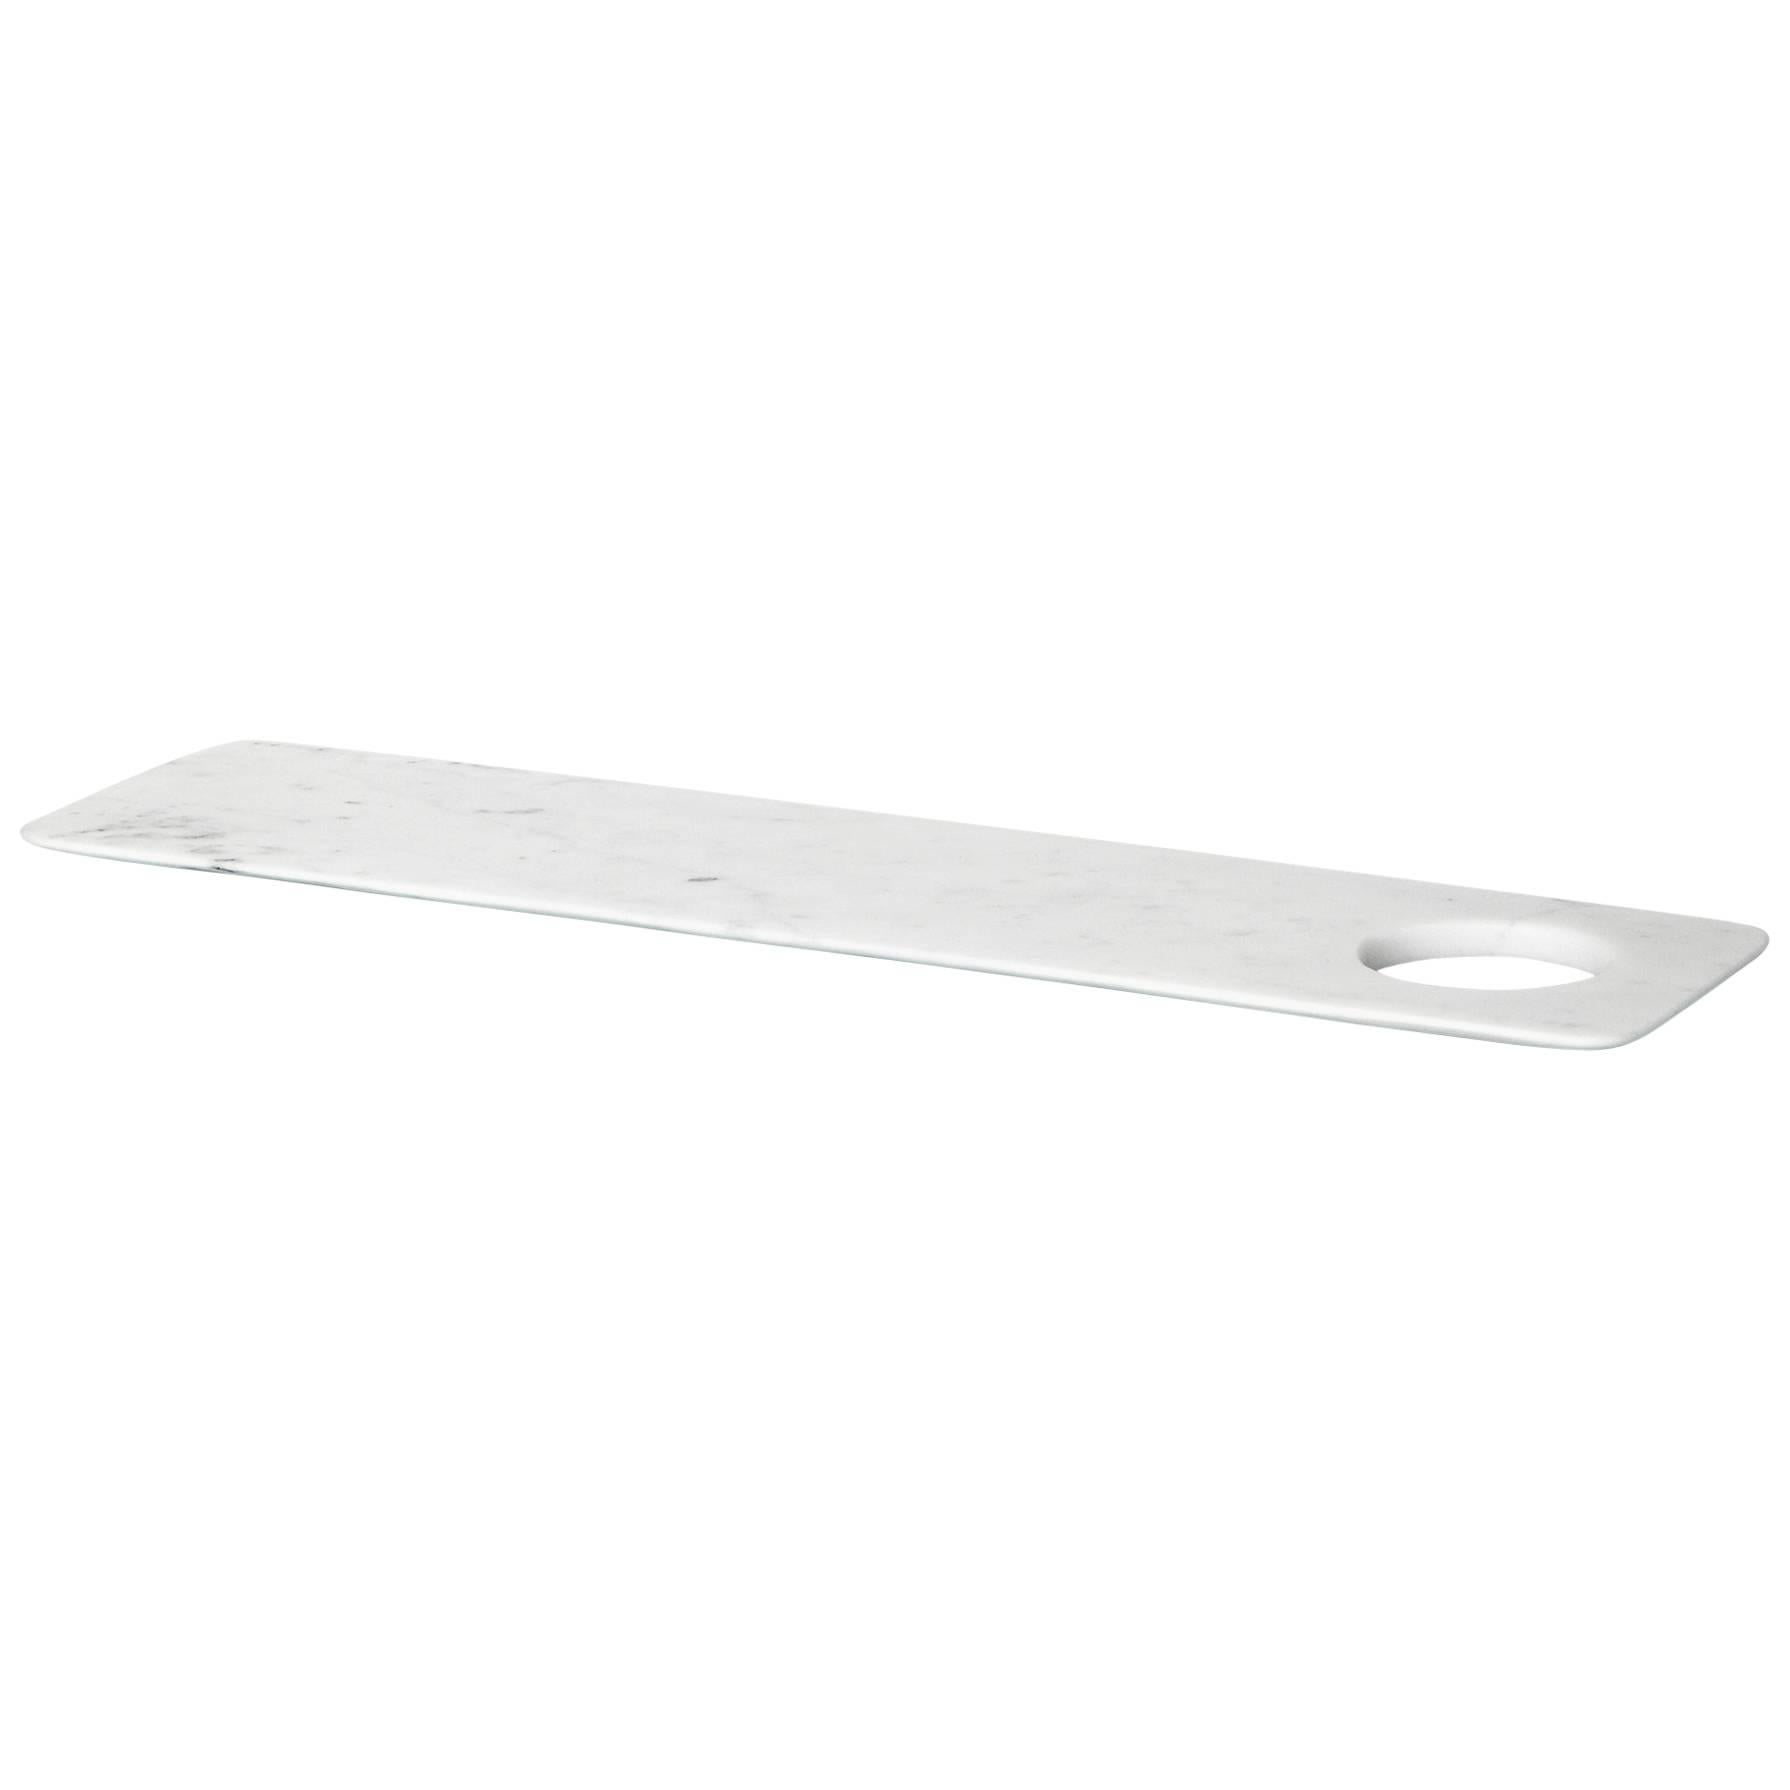 New Modern Tray/Chopping Board in White Carrara Marble, creator Studioformart For Sale